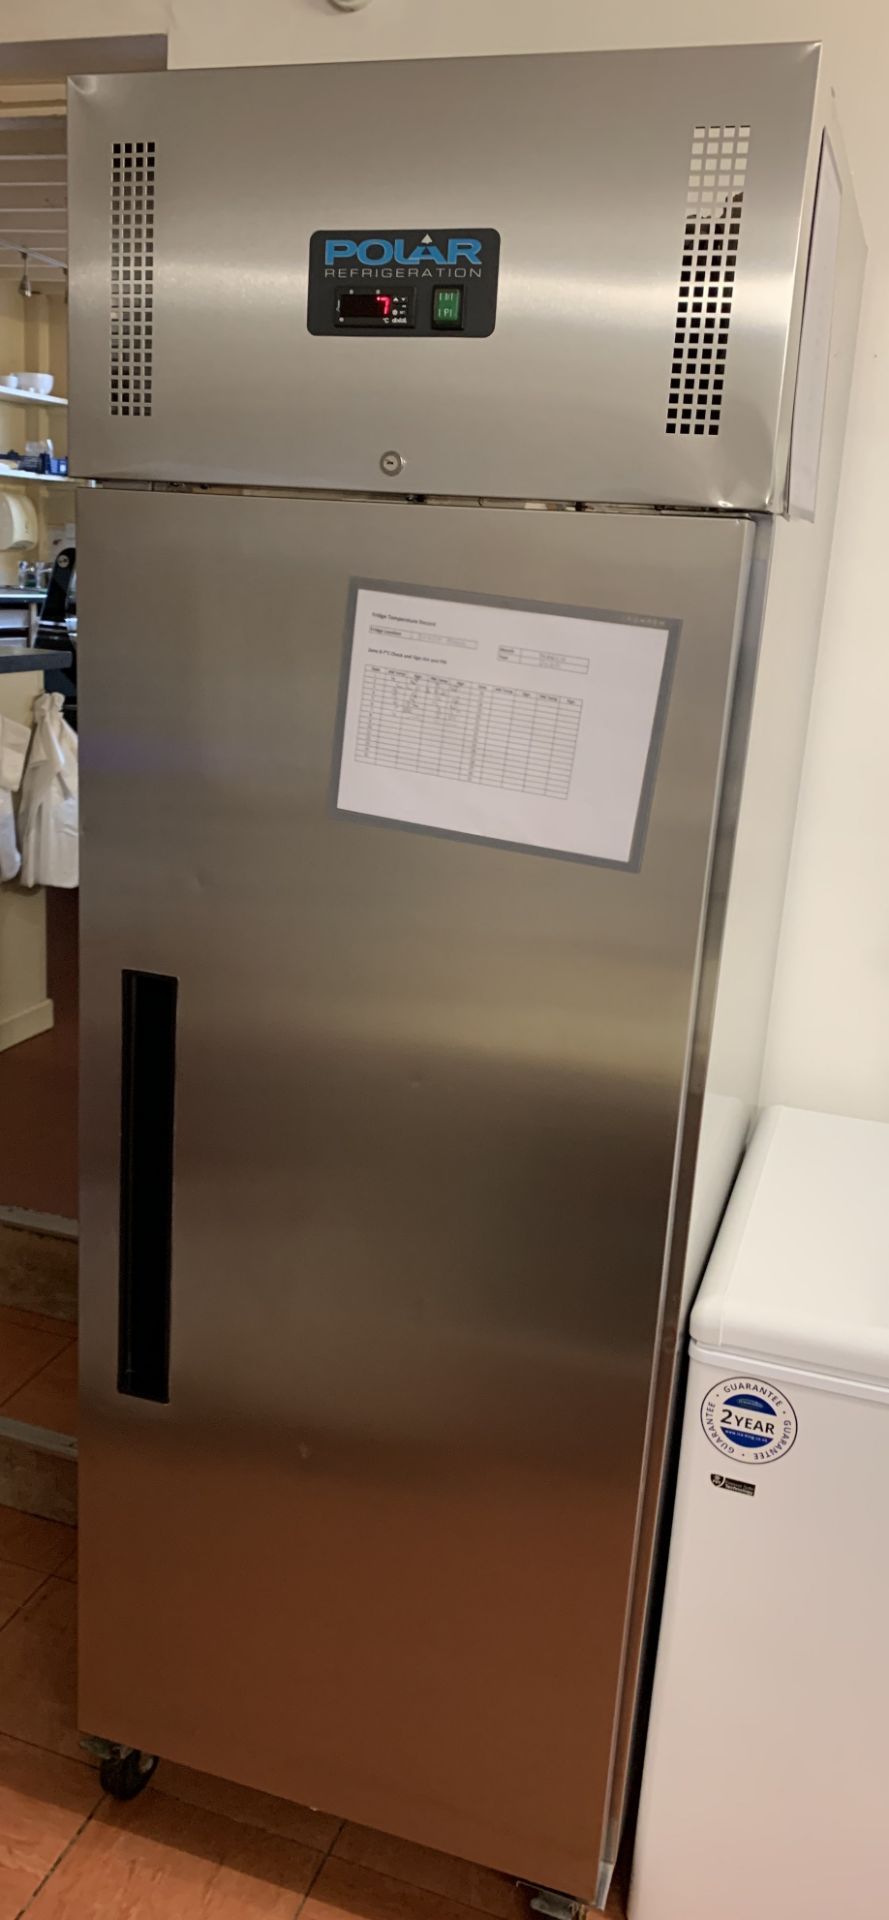 Polar Model G592 single door stainless steel refrigerator